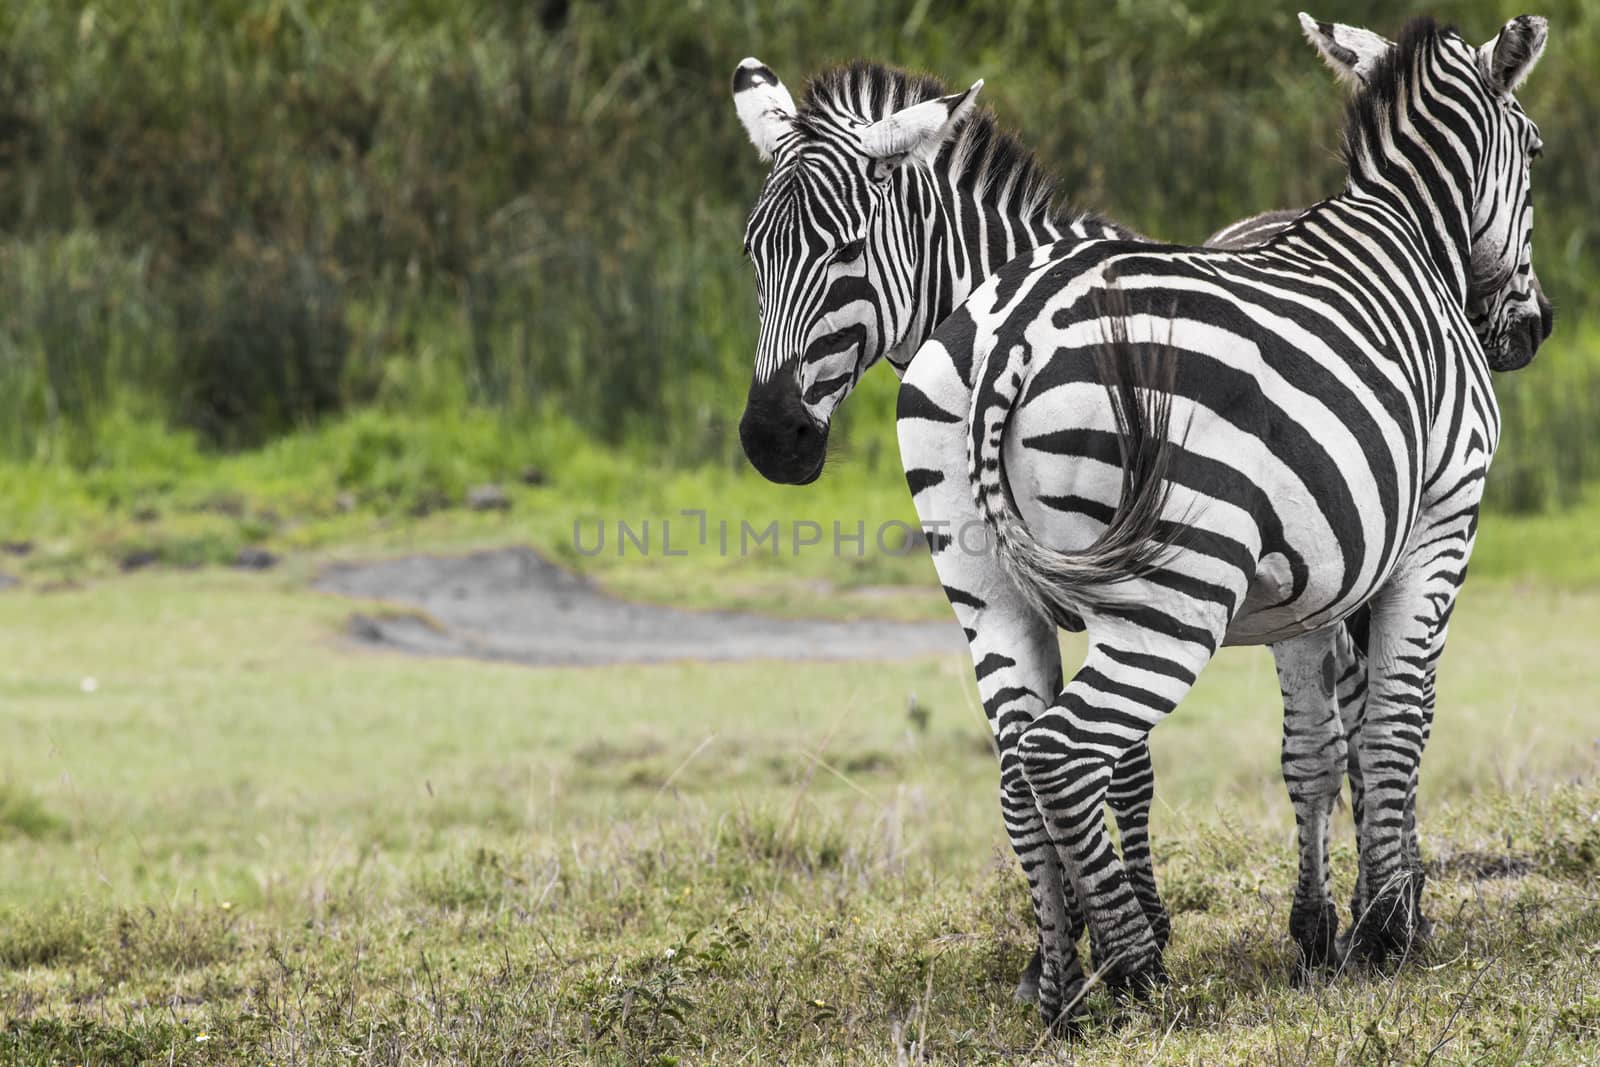 Zebras in Ngorongoro conservation area, Tanzania